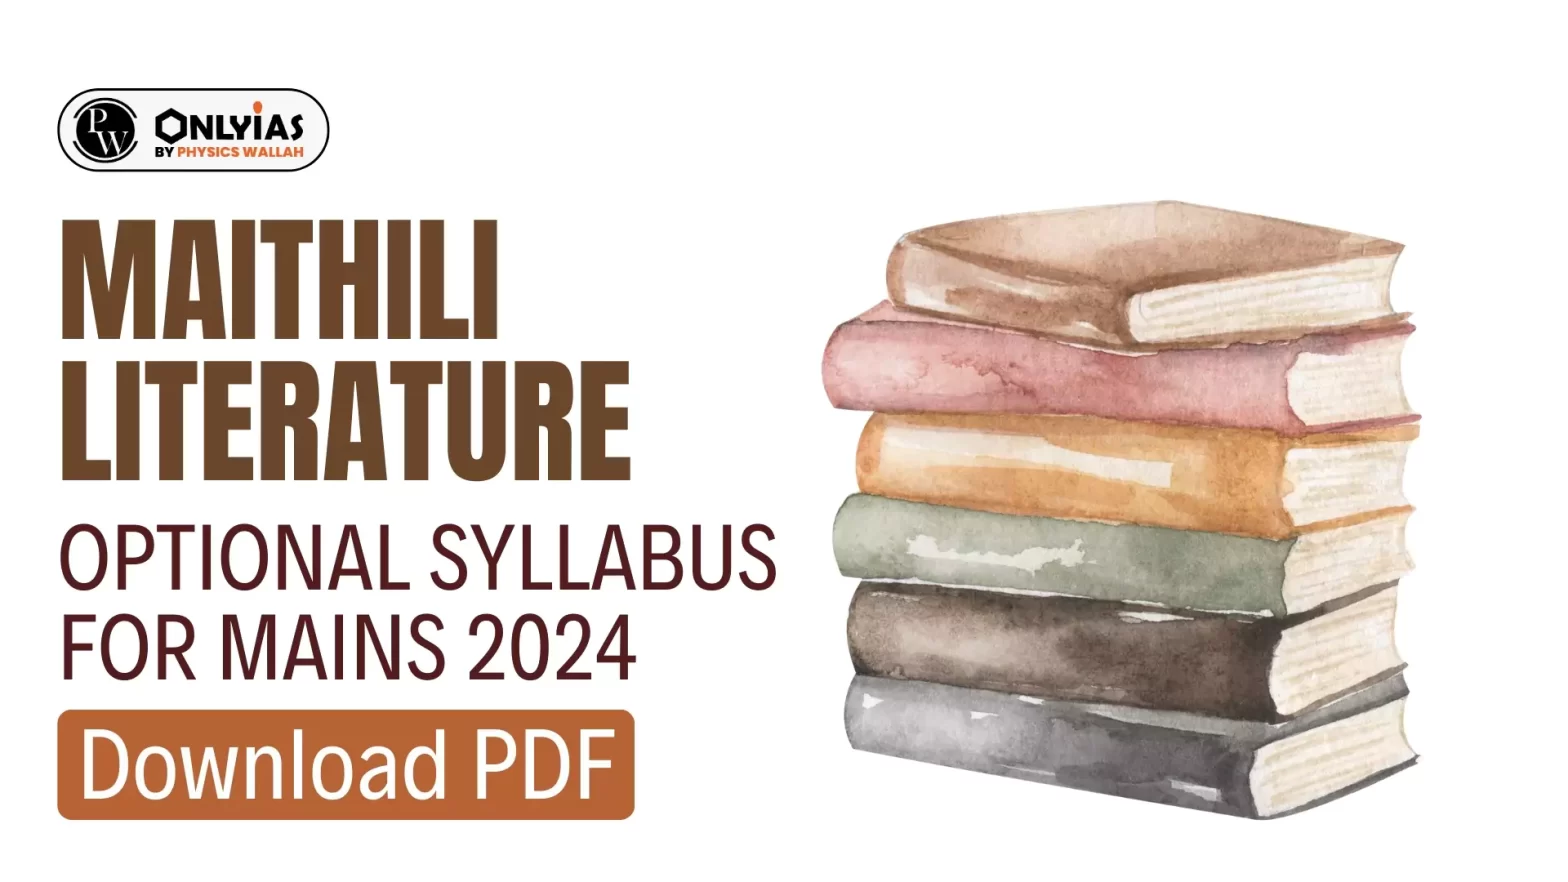 Maithili Literature Optional Syllabus for Mains 2024, Download PDF